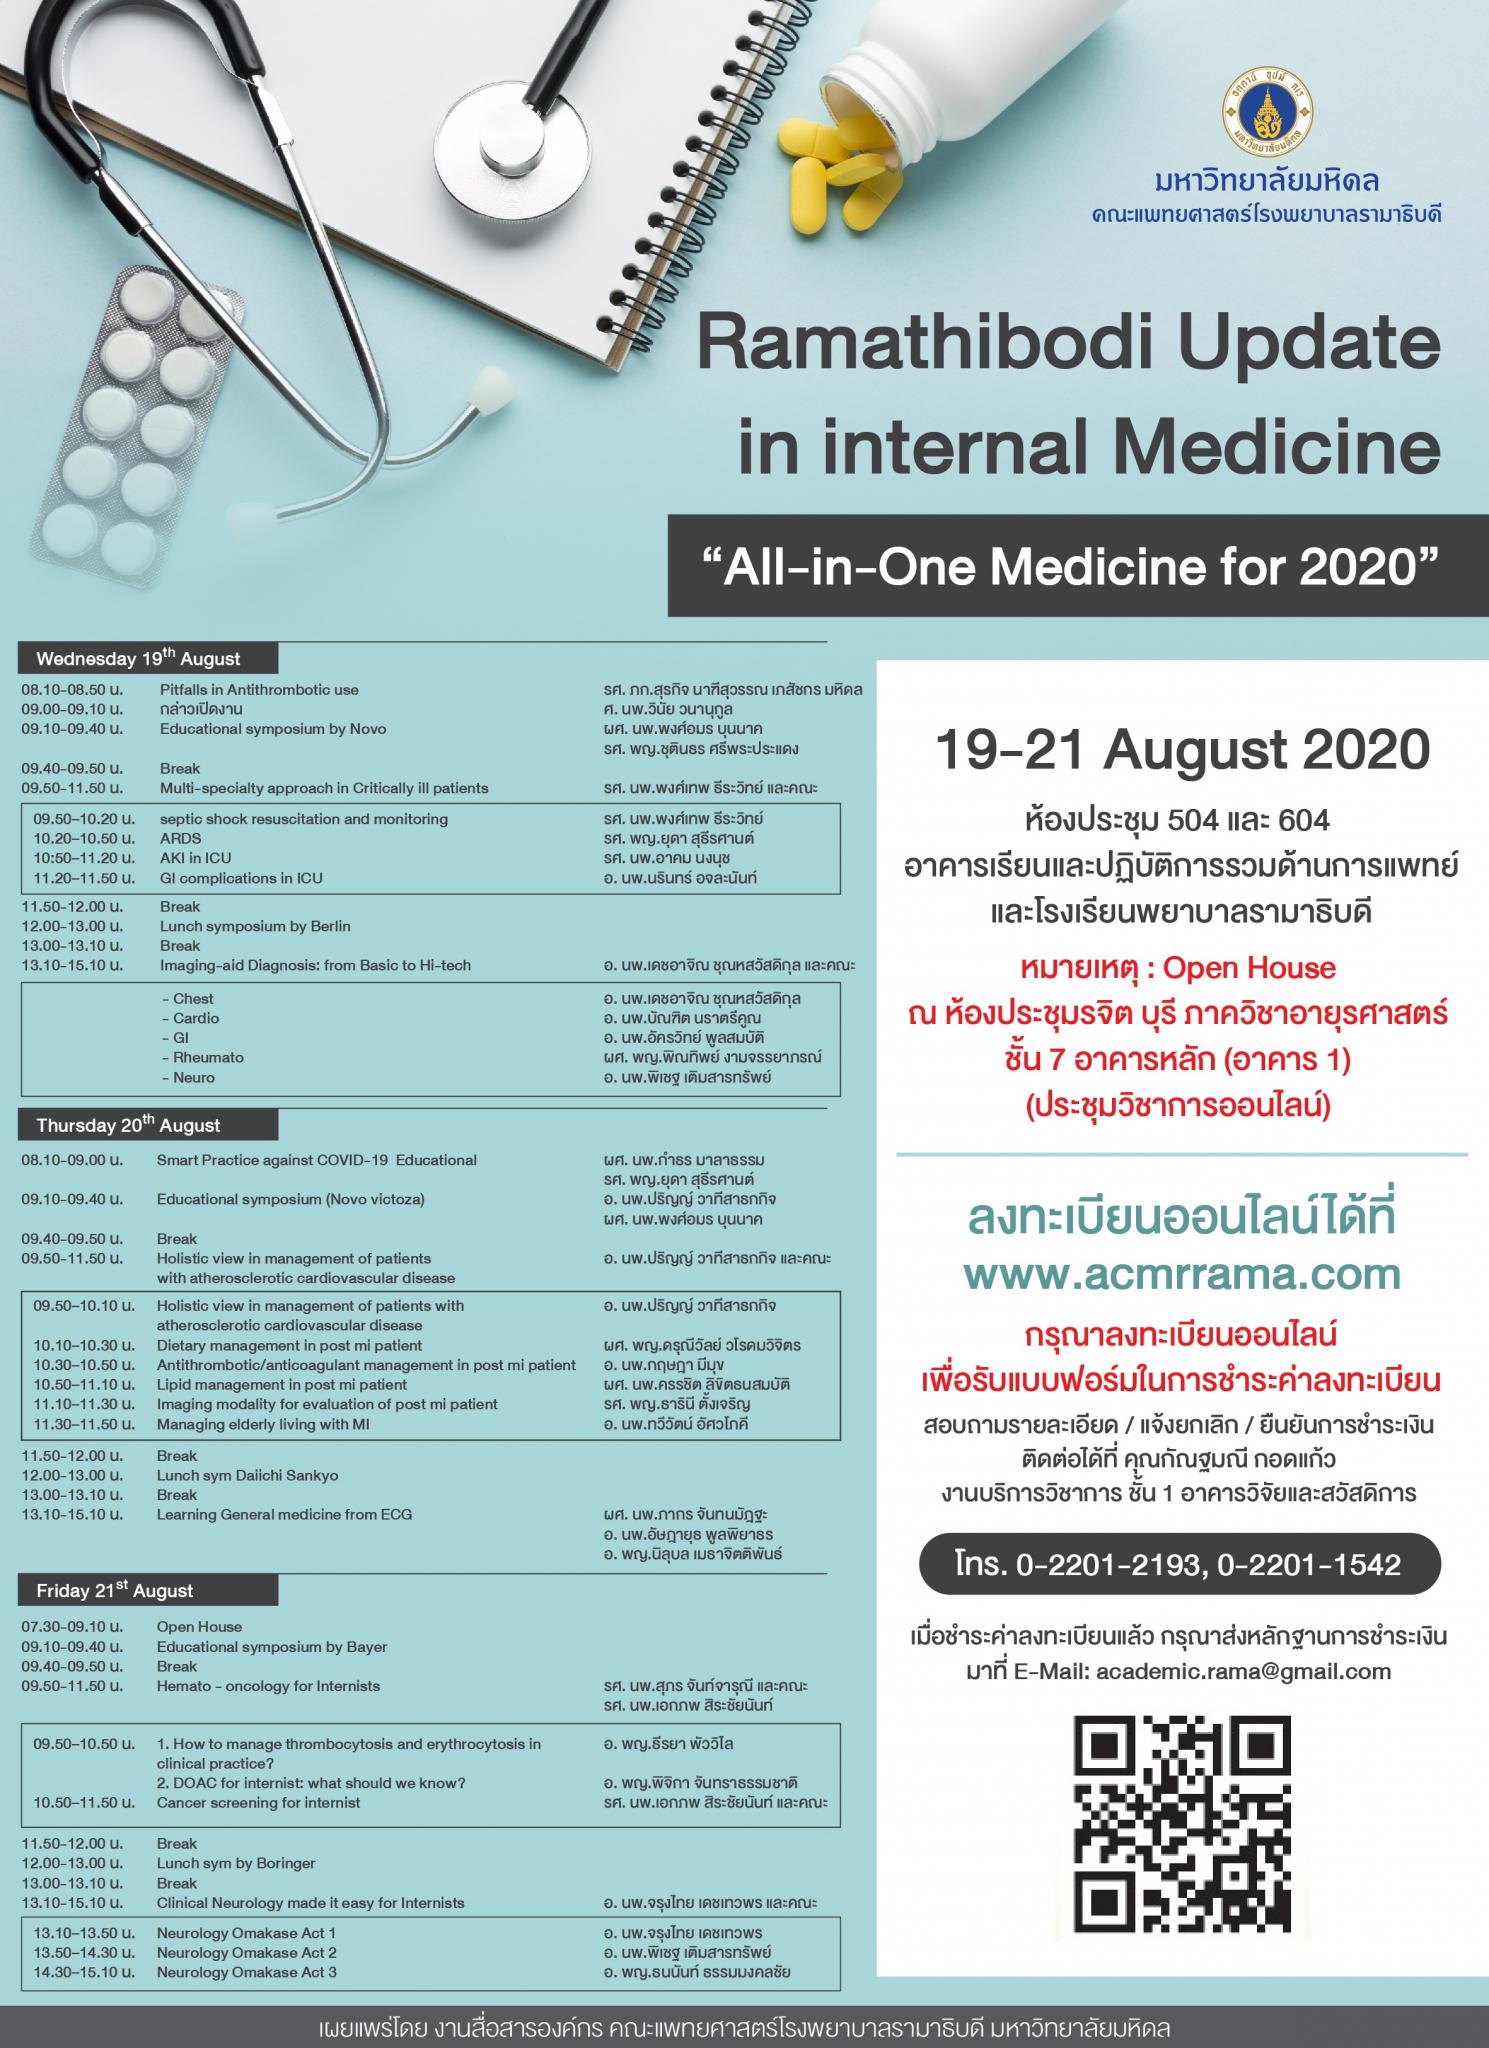 Ramathibodi Update in internal Medicine "All-in-One Medicine for 2020"